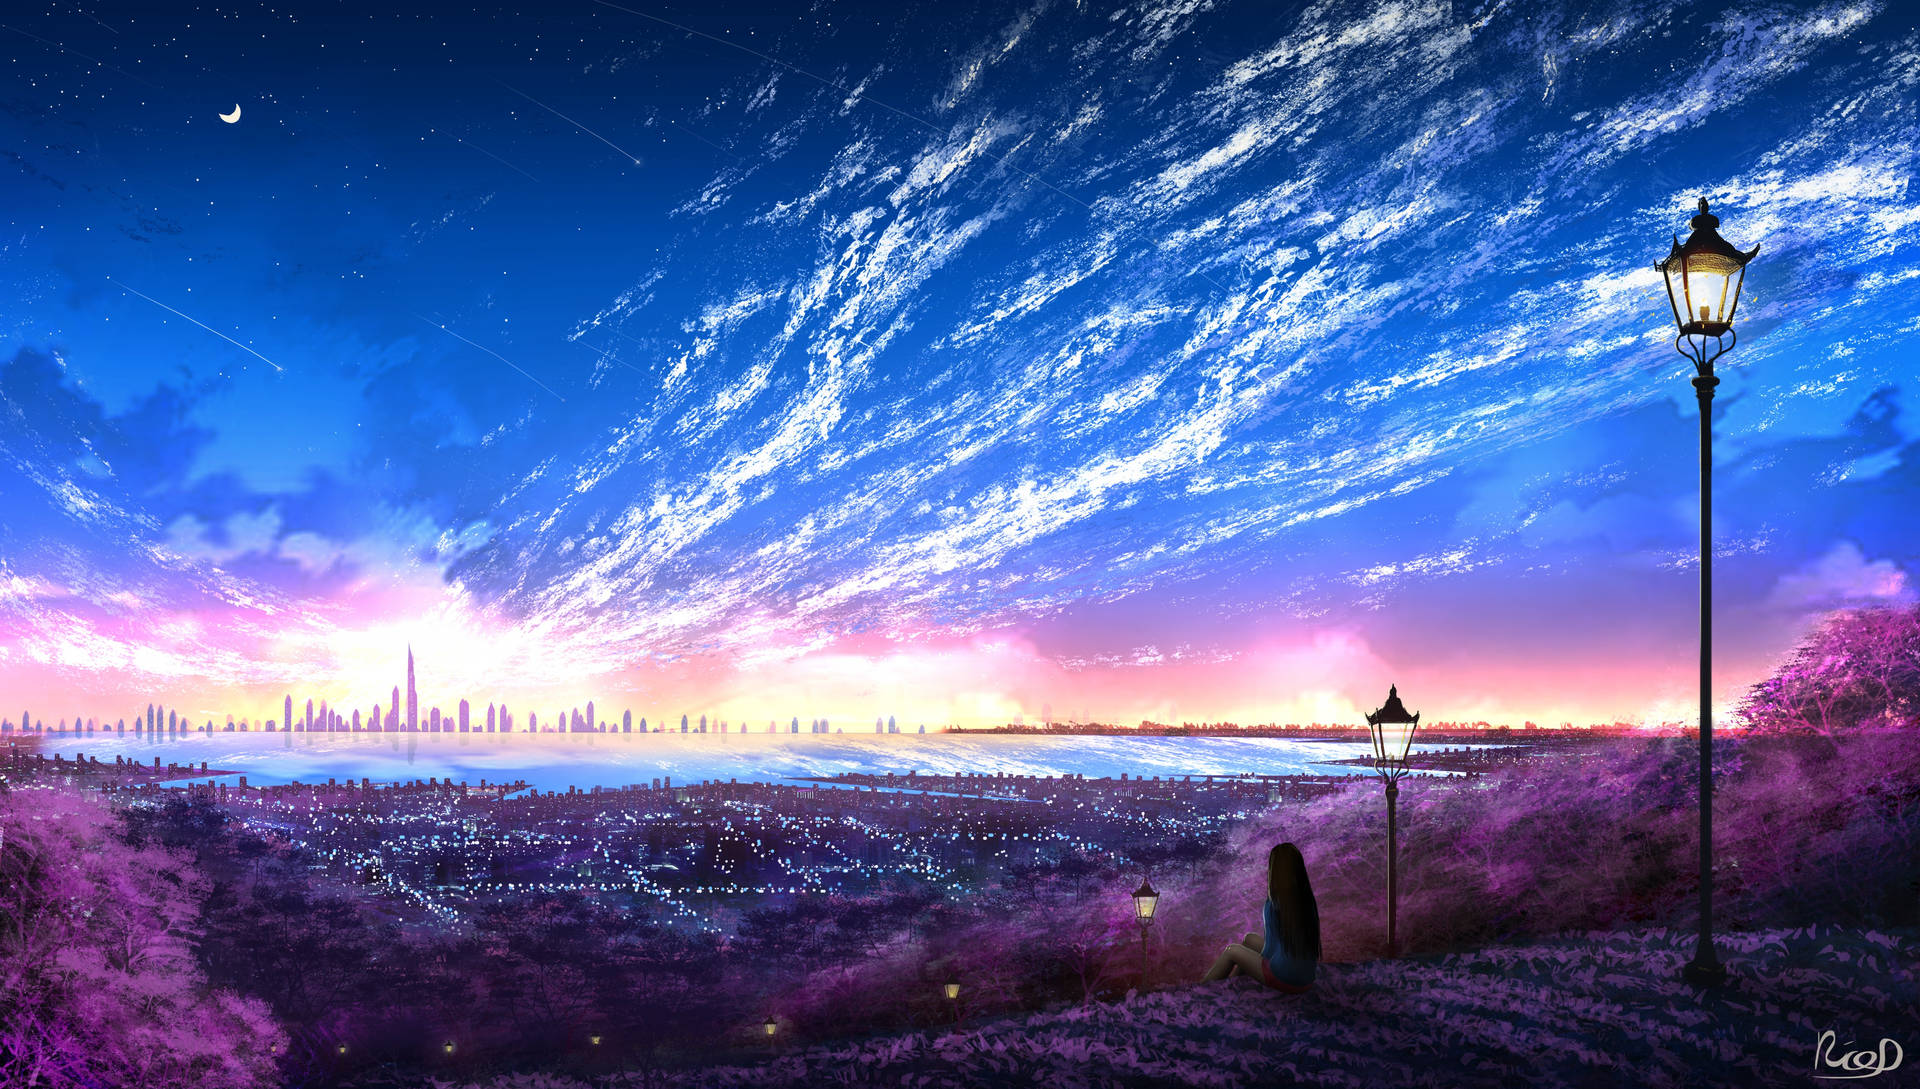 Tag natbyen skønhed i anime. Wallpaper